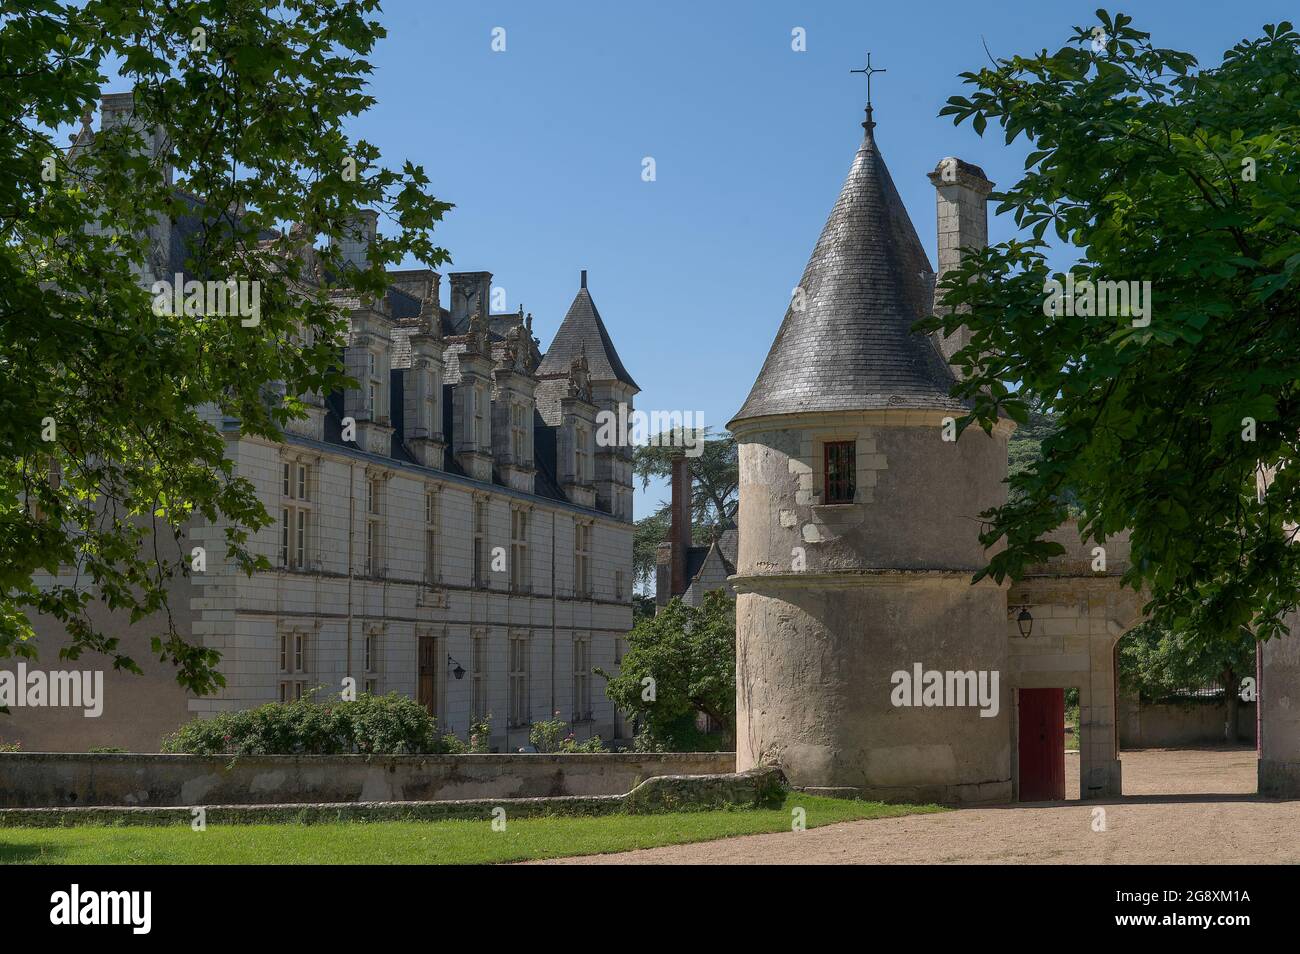 Château de Nitray, Nitray, Loire Valley, France Stock Photo